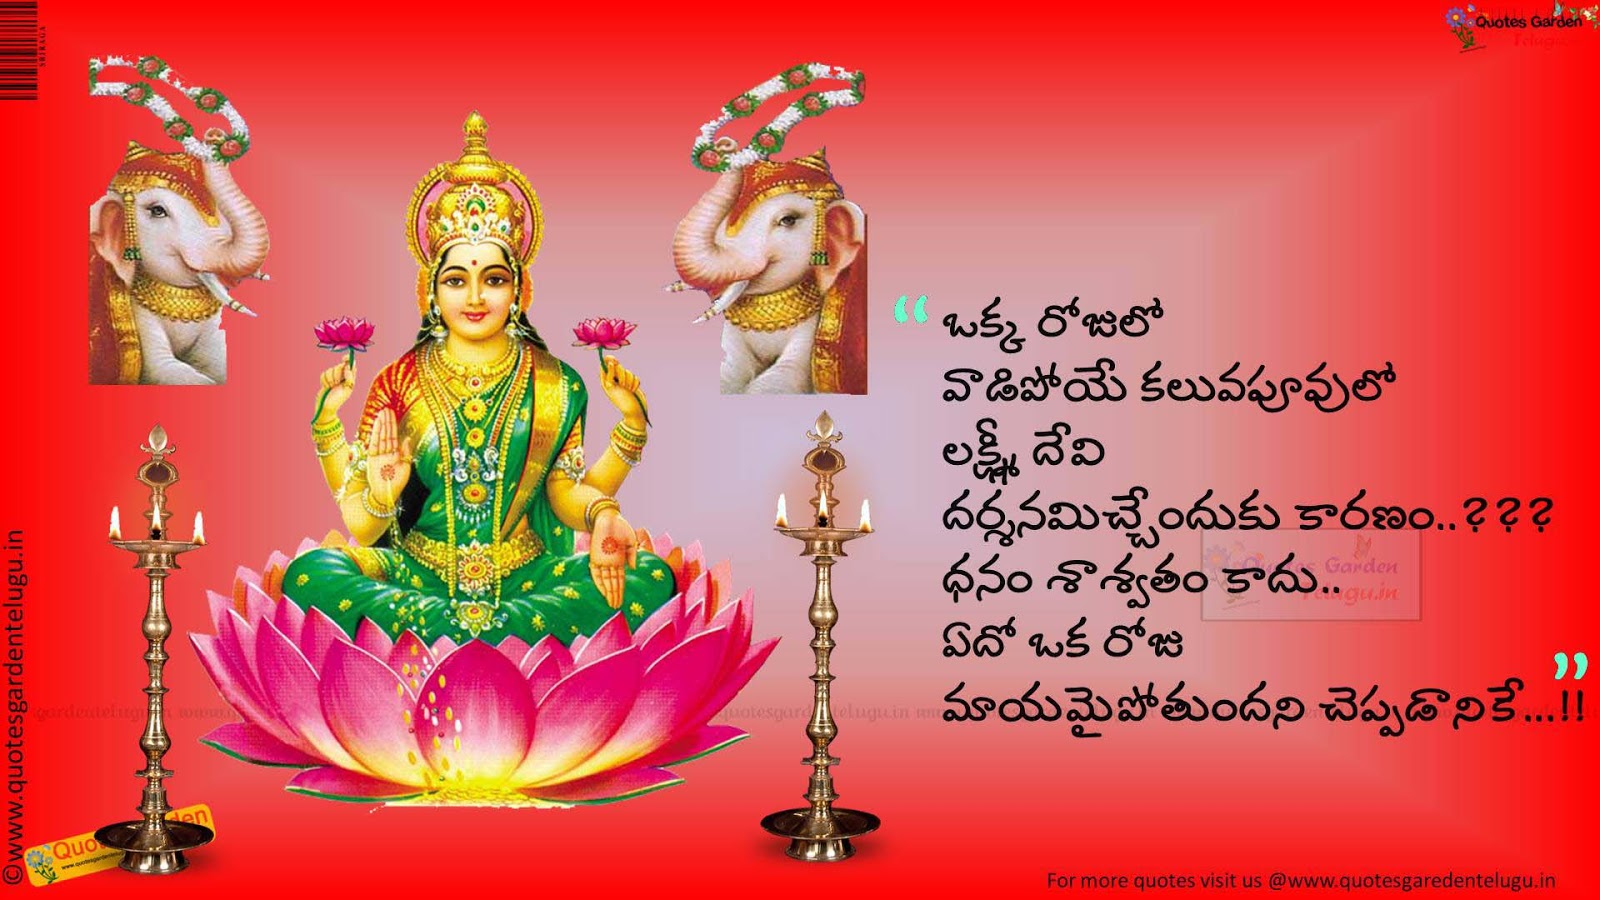 Telugu wealth Quotes with Lakshmi devi images  QUOTES 